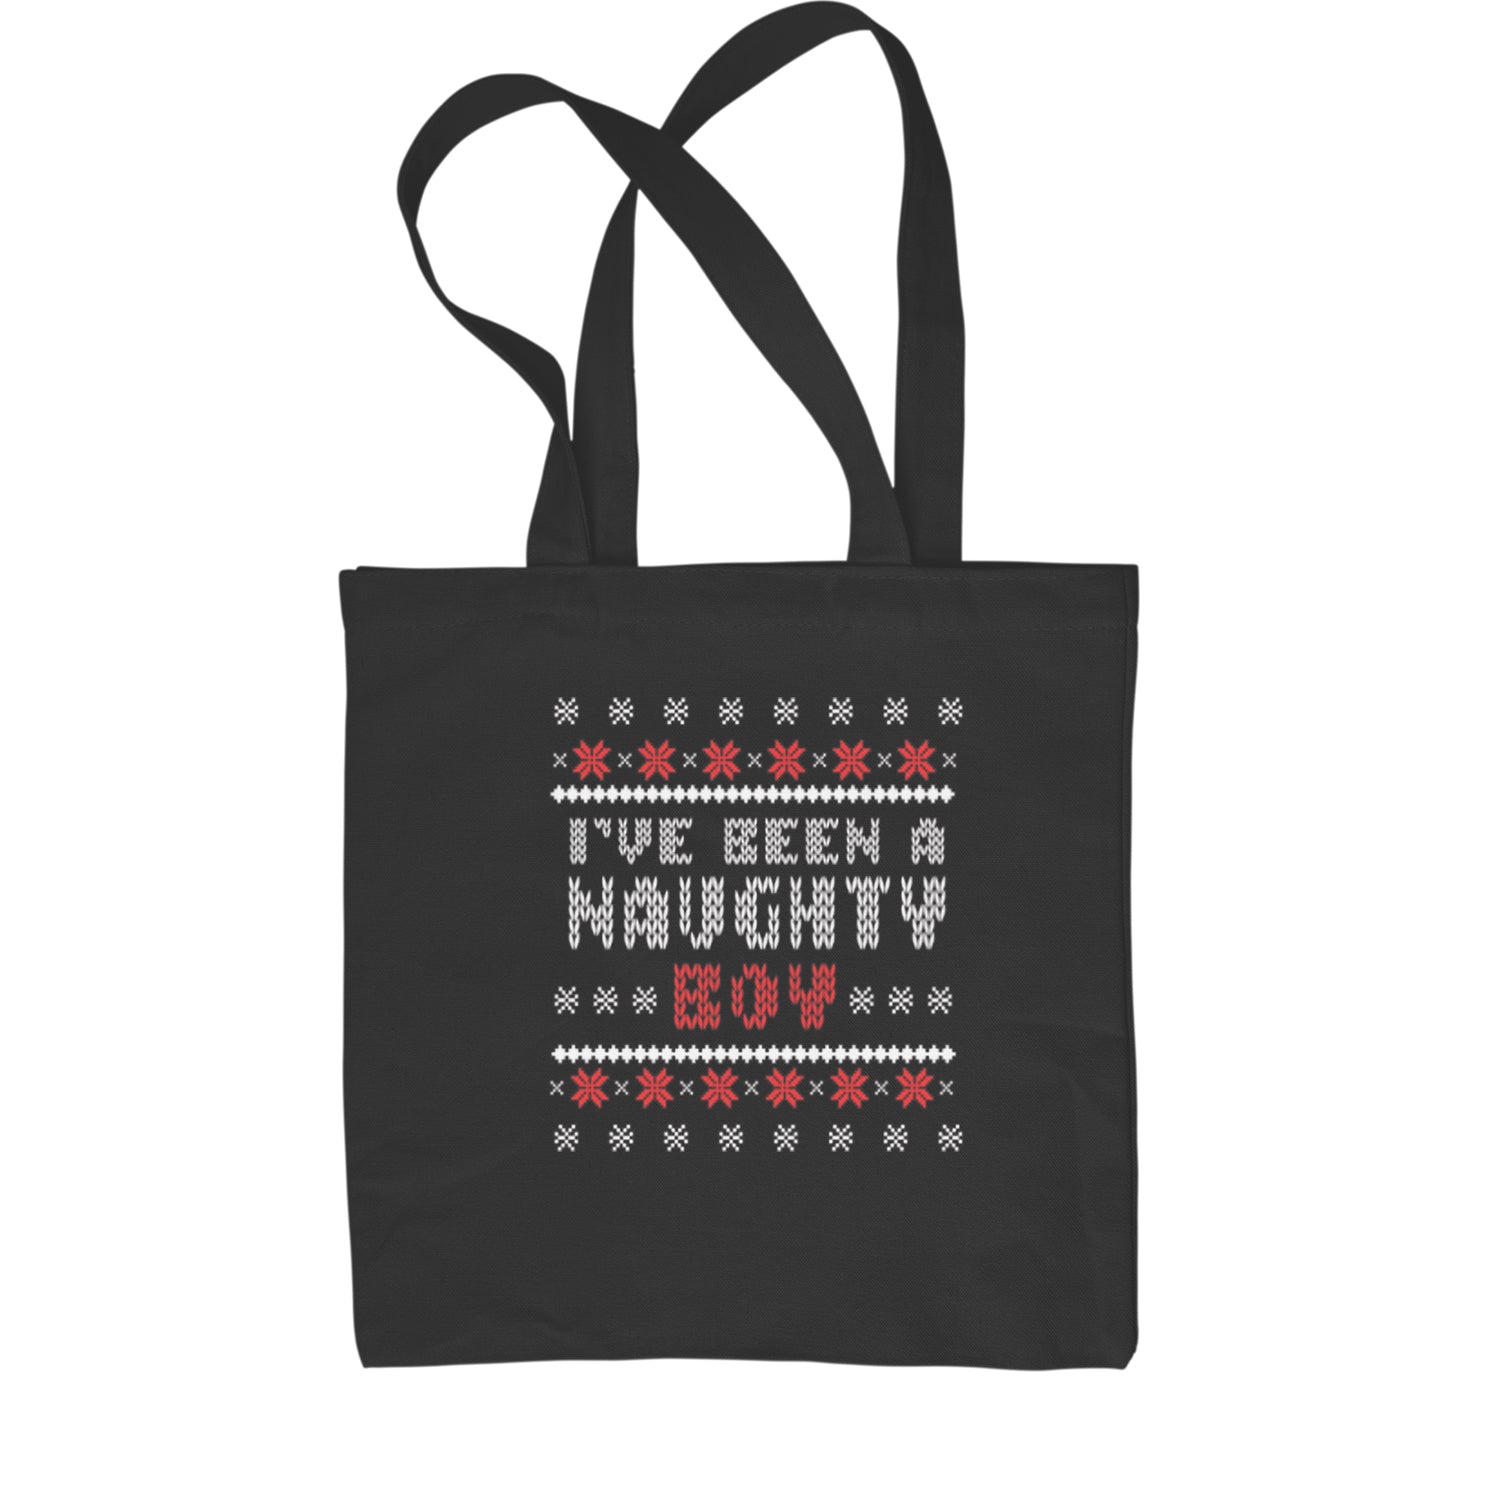 I've Been A Naughty Boy Ugly Christmas Shopping Tote Bag list, naughty, nice, santa, ugly, xmas by Expression Tees